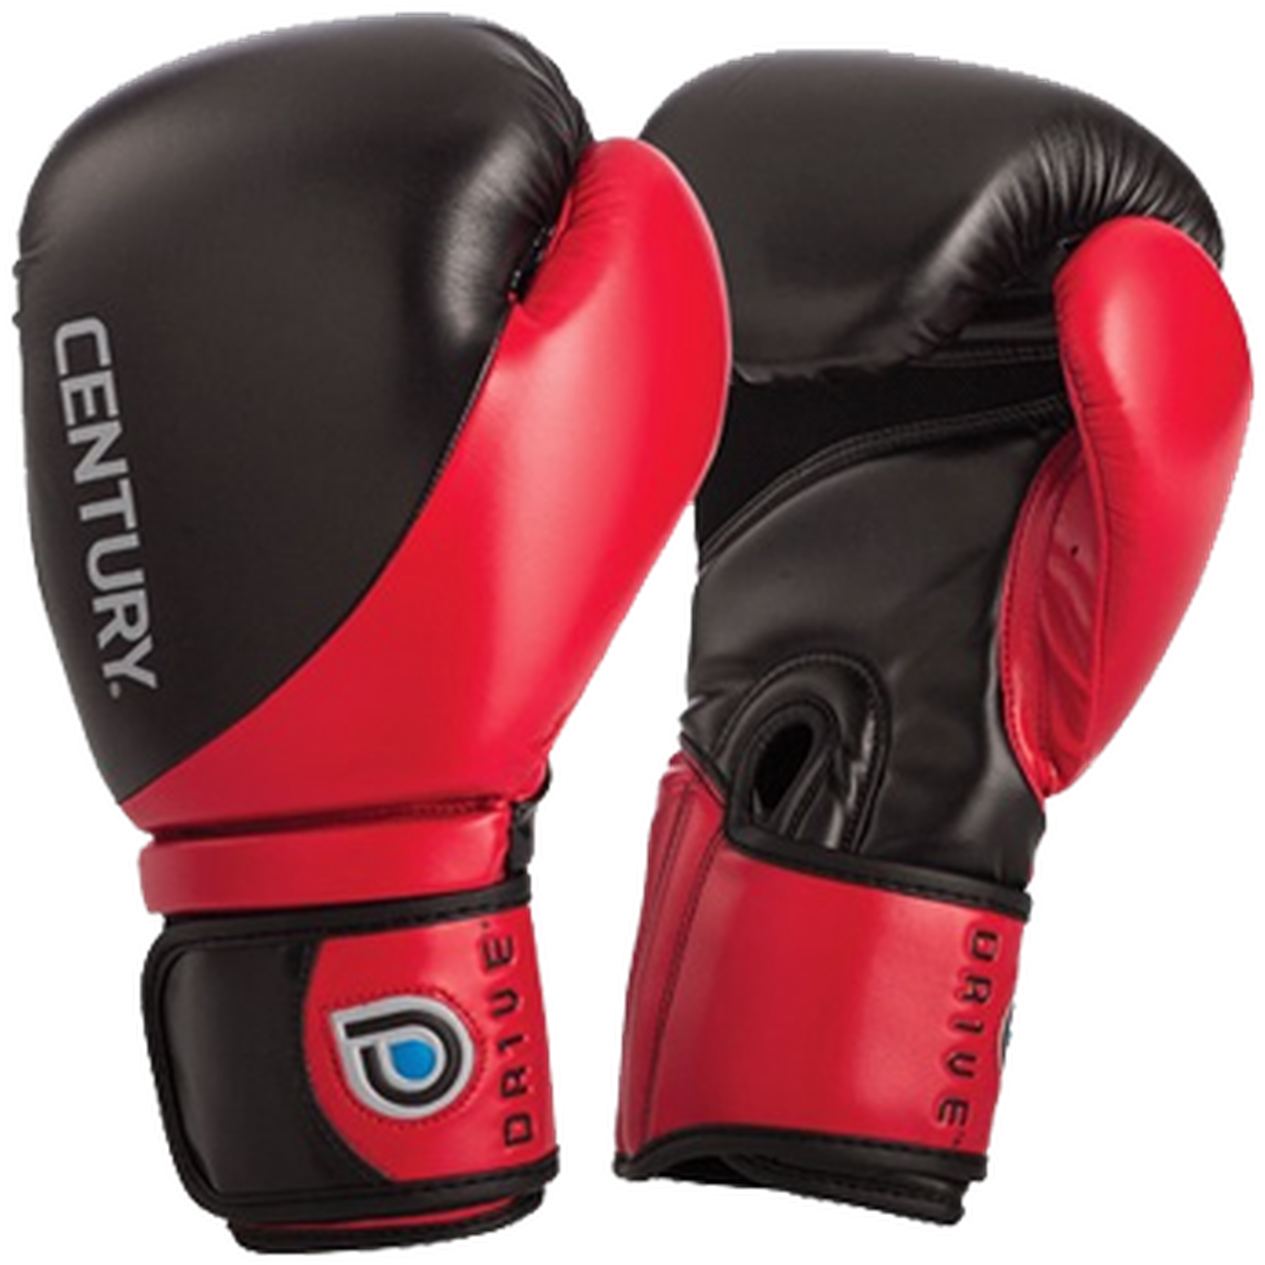 Redand Black Century Boxing Gloves PNG image